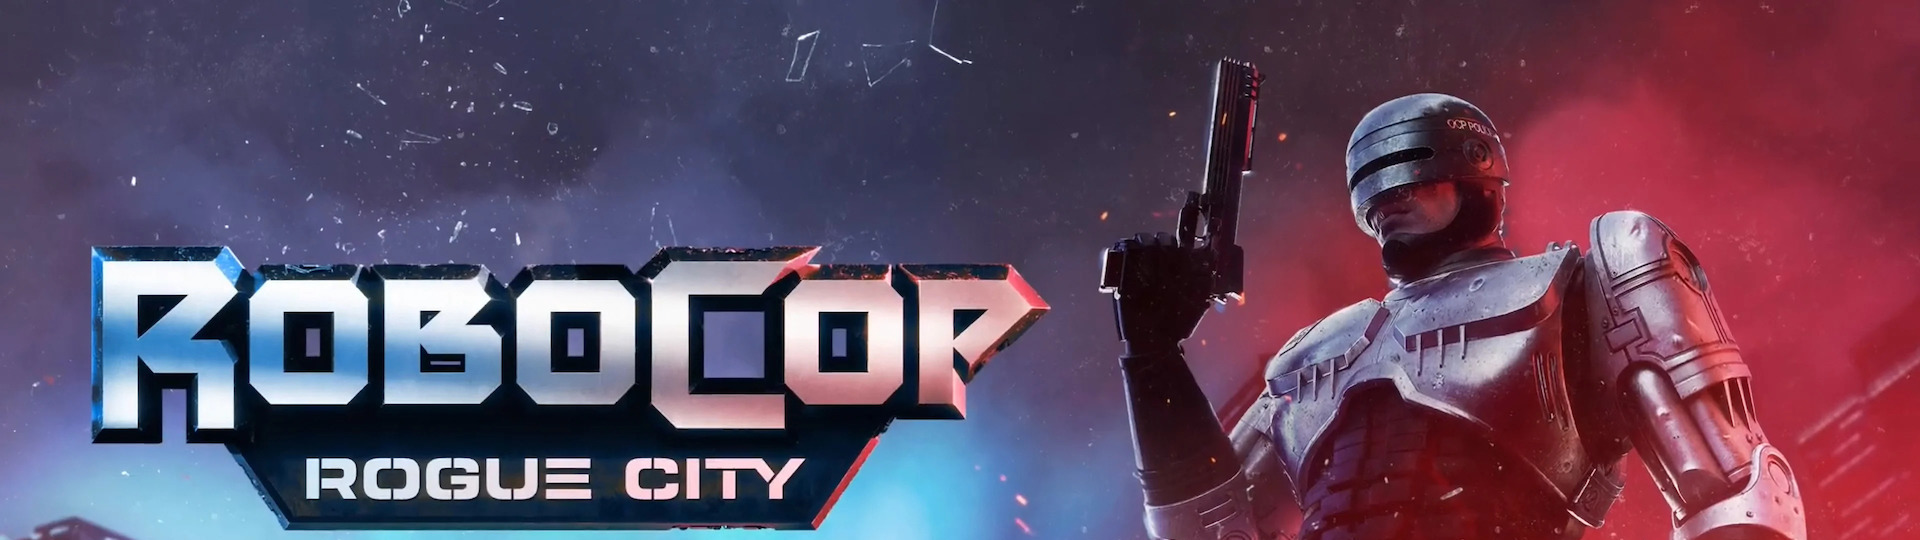 RoboCop: Roque City na prvním gameplay videu | Videa